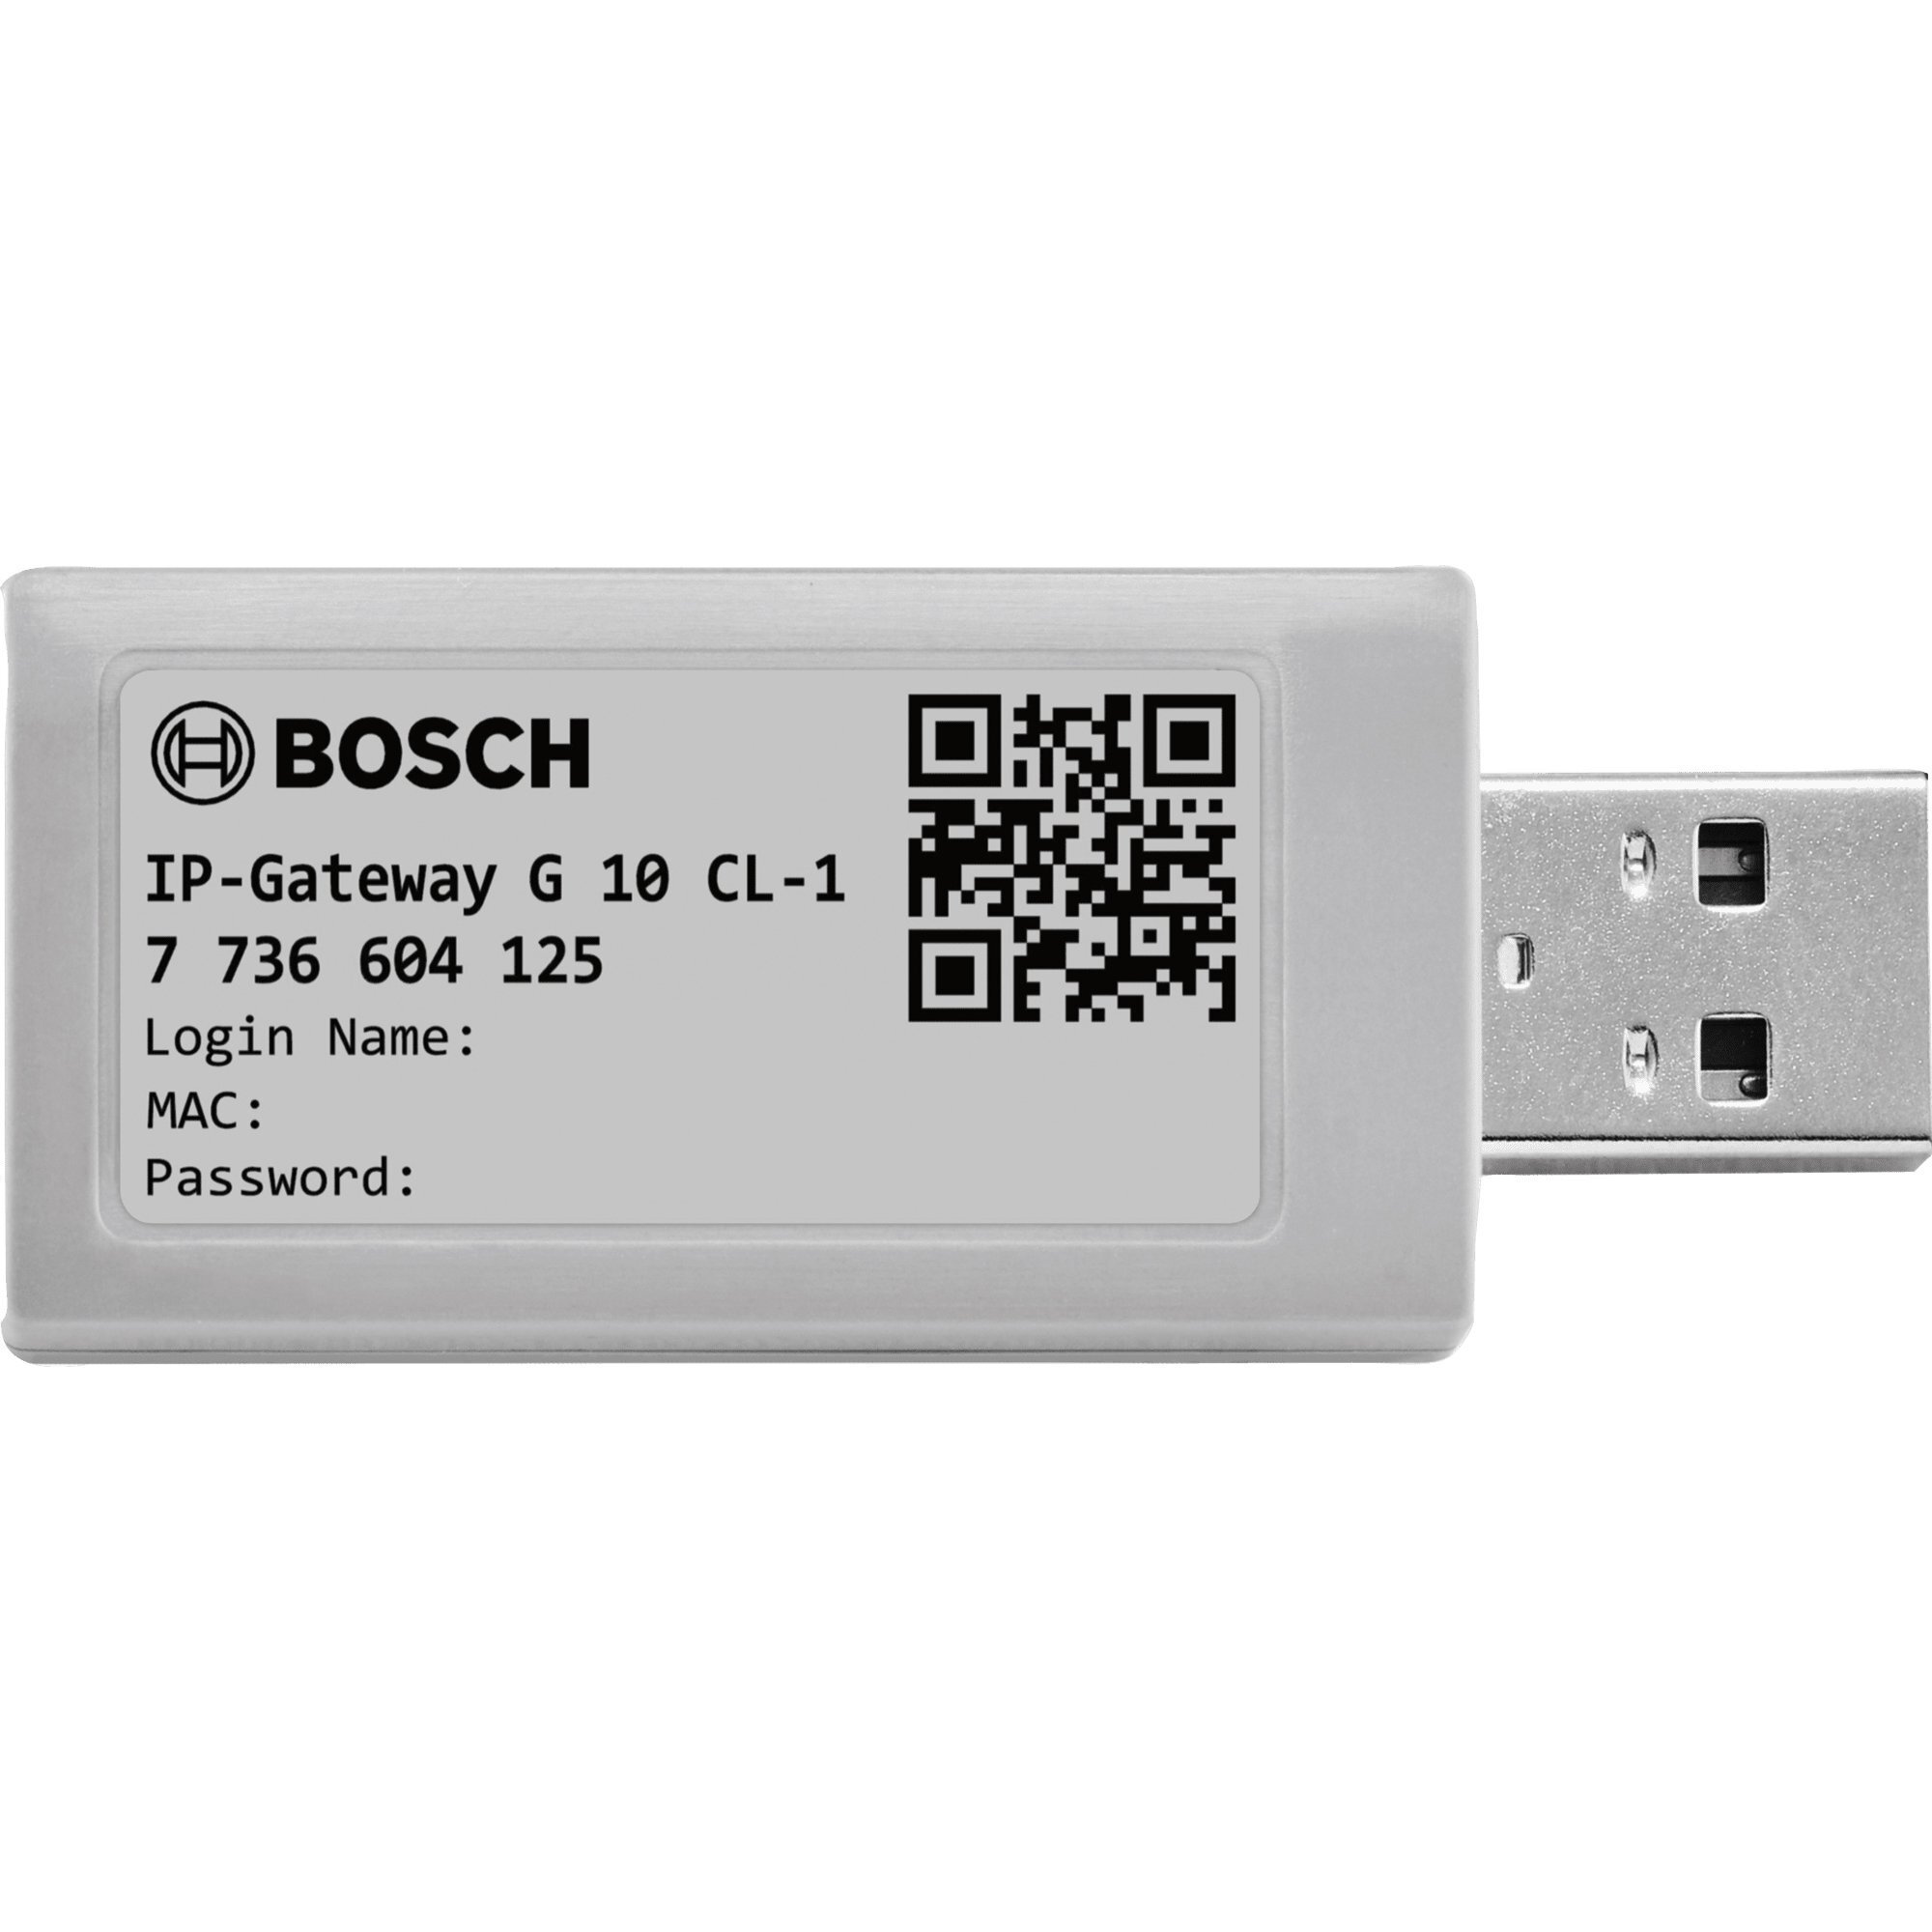 Адаптер Wi-Fi Bosch MiAc-03 G10CL1 для кондиционеров Bosch CL3000i, CL5000i фото 1